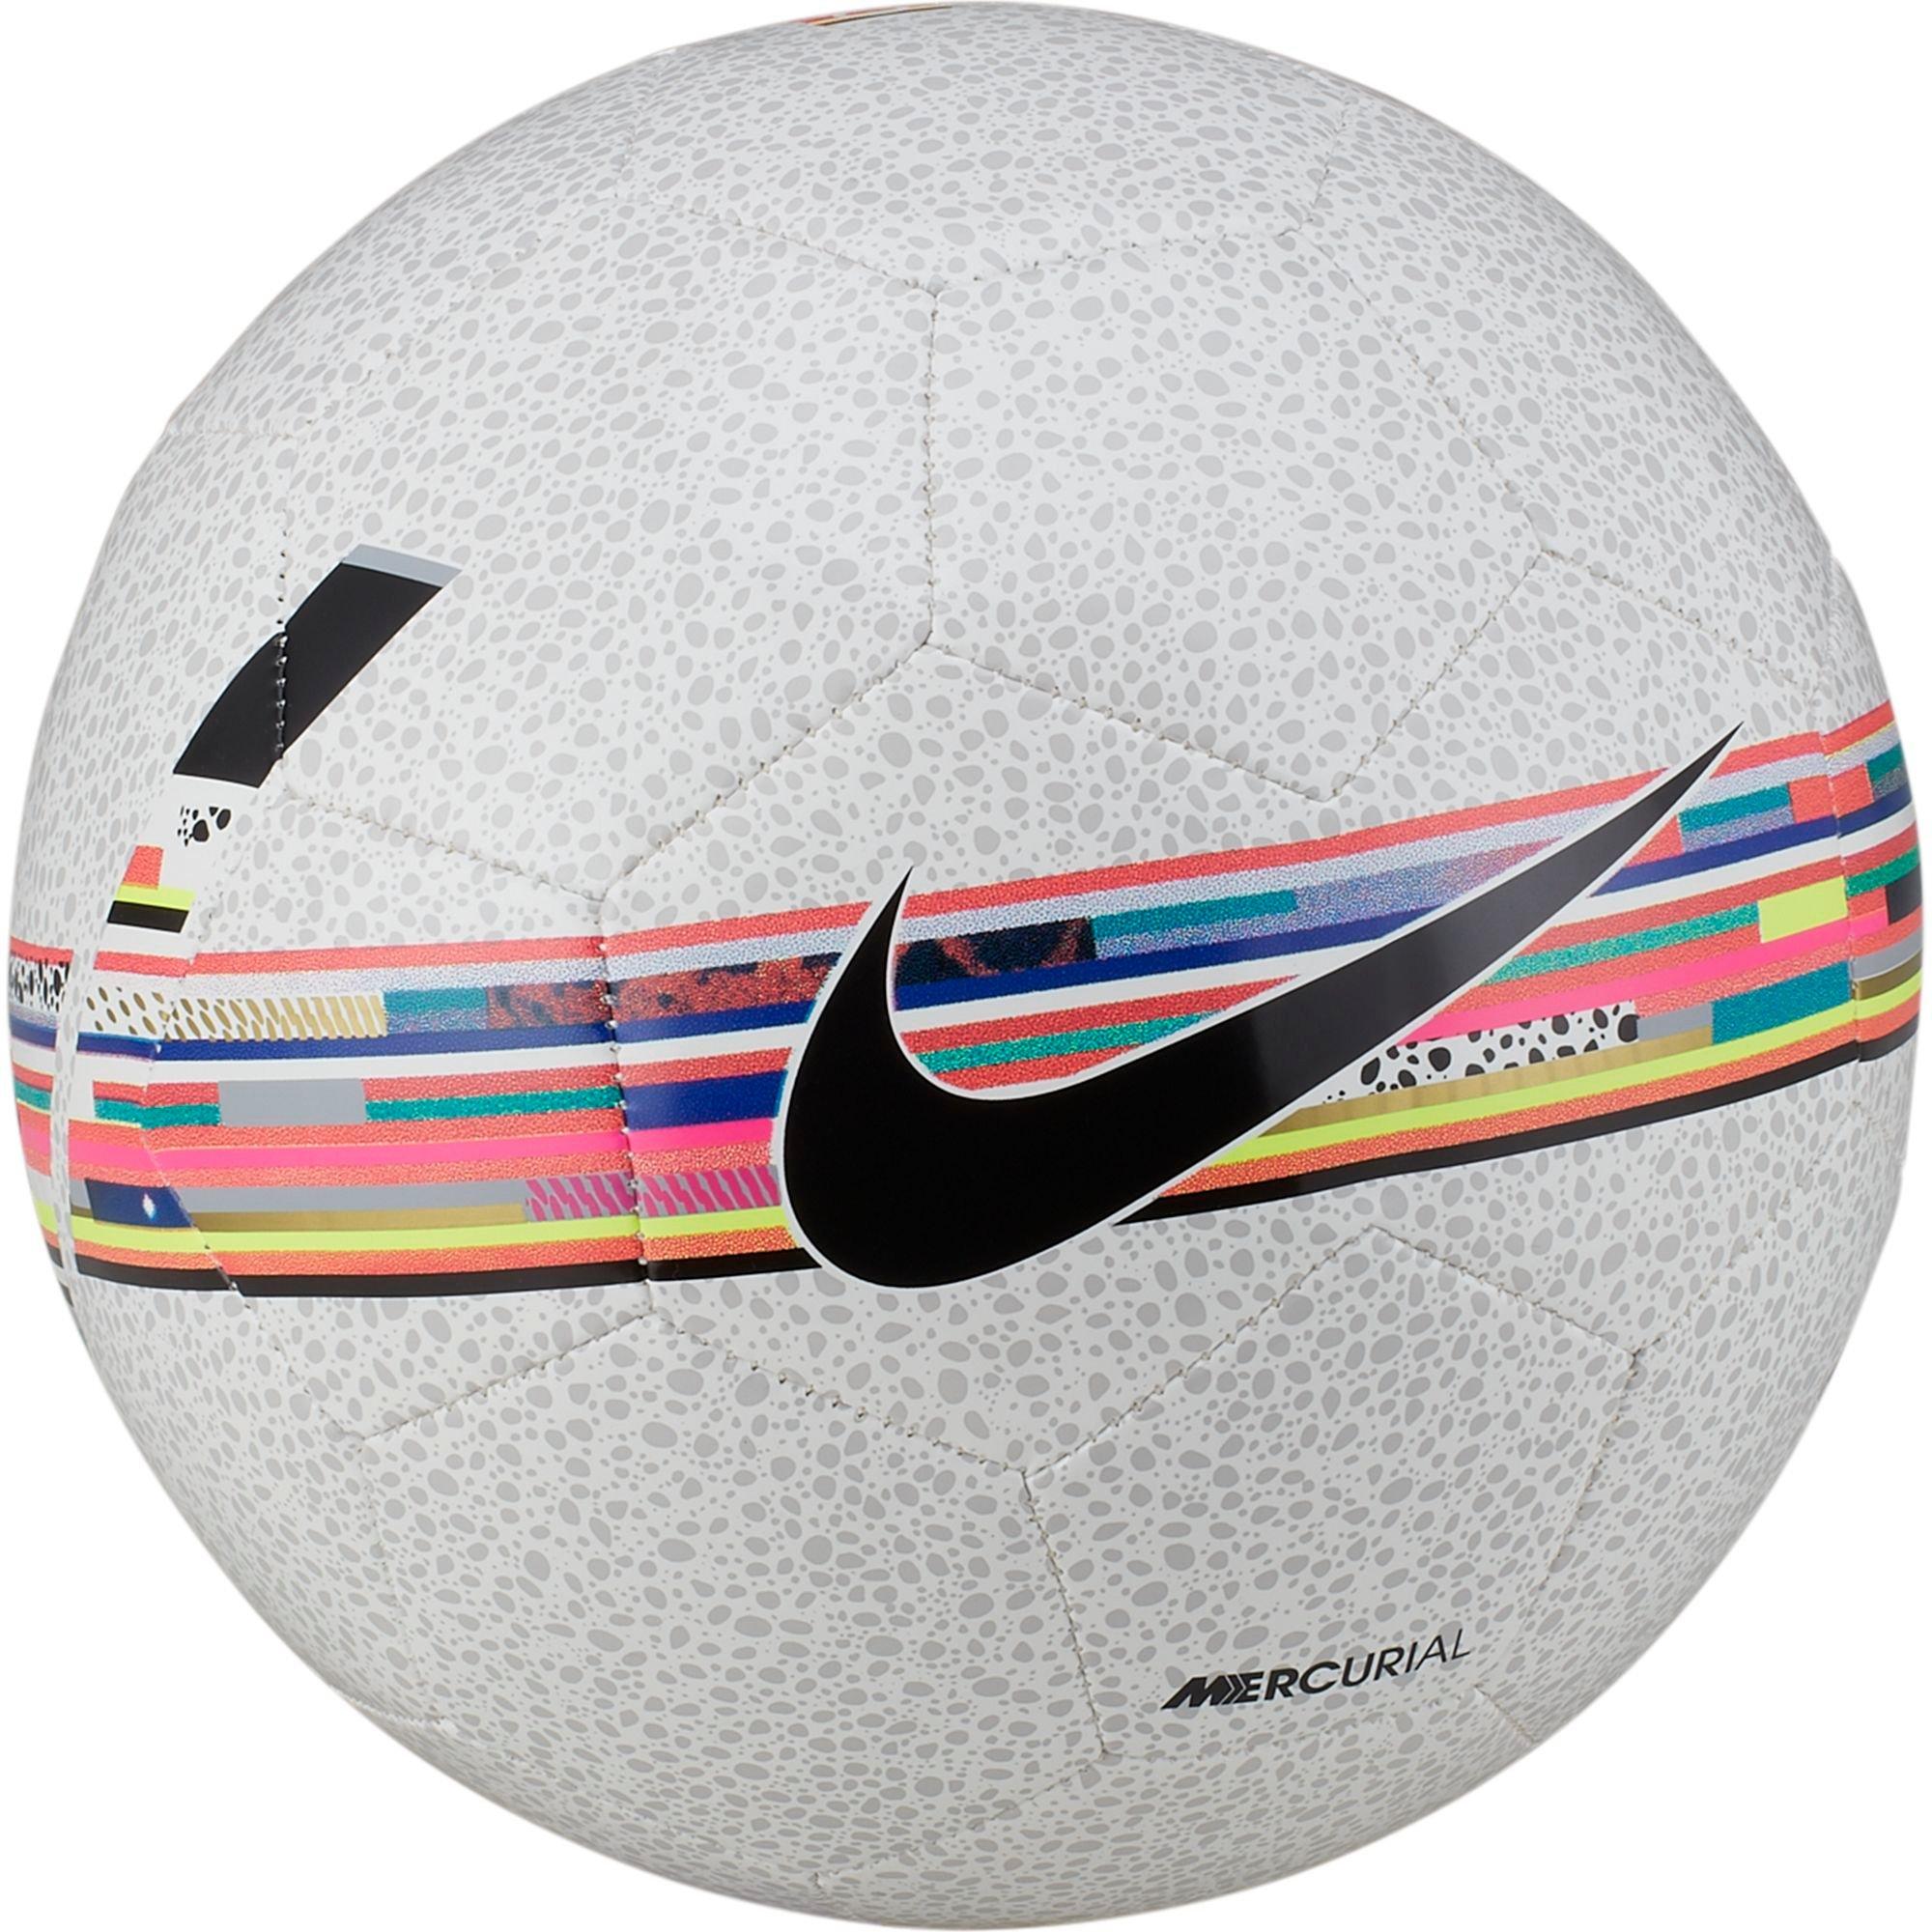 cr7 soccer ball size 5